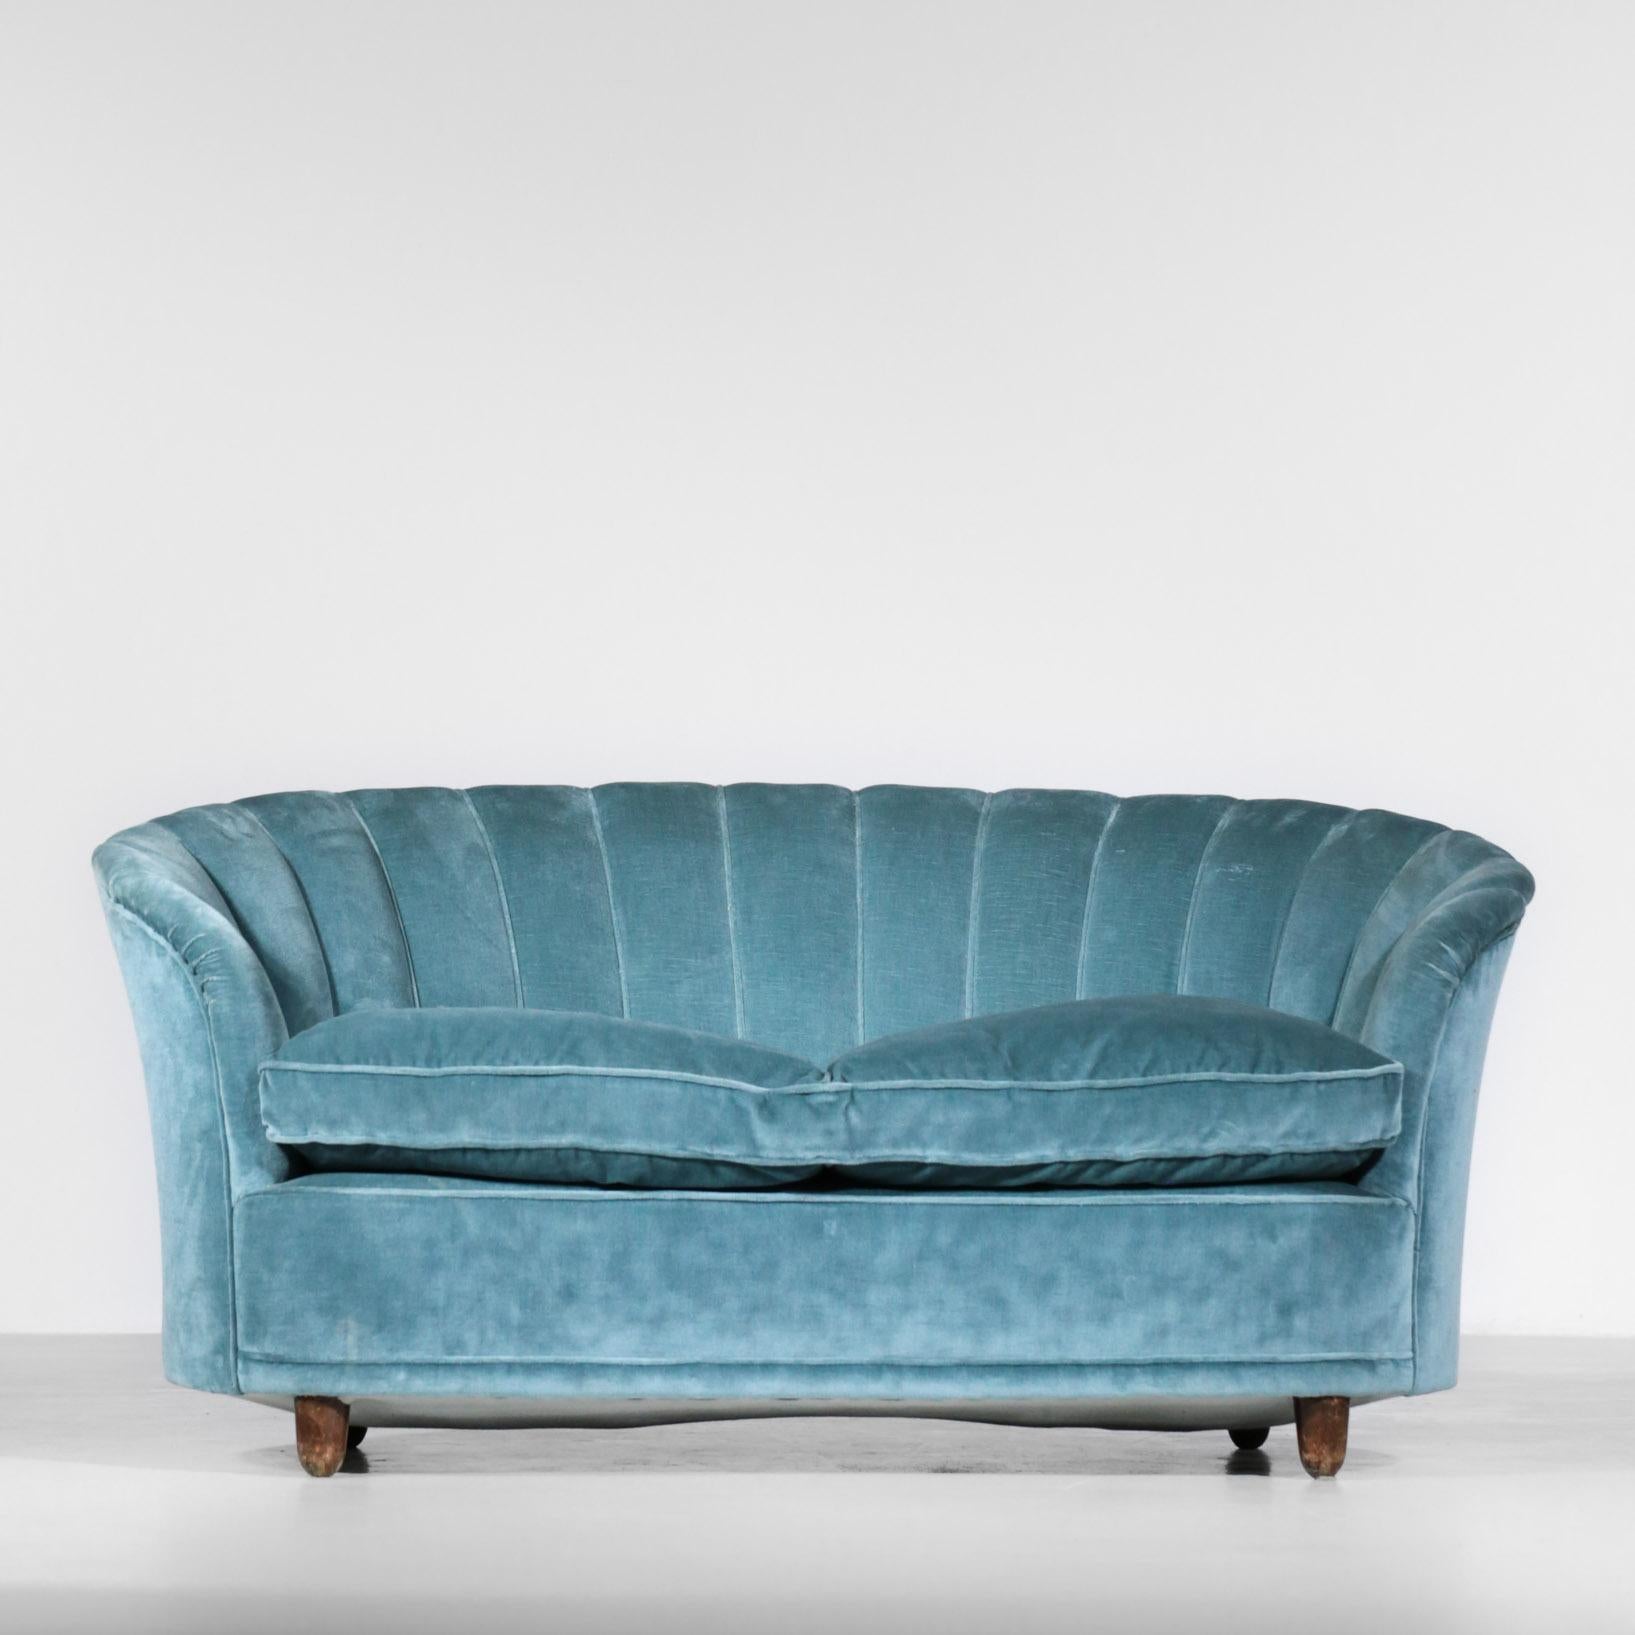 Pair of Italian armchair by Gio Ponti. Original velvet fabric (some signs of use, see photos).